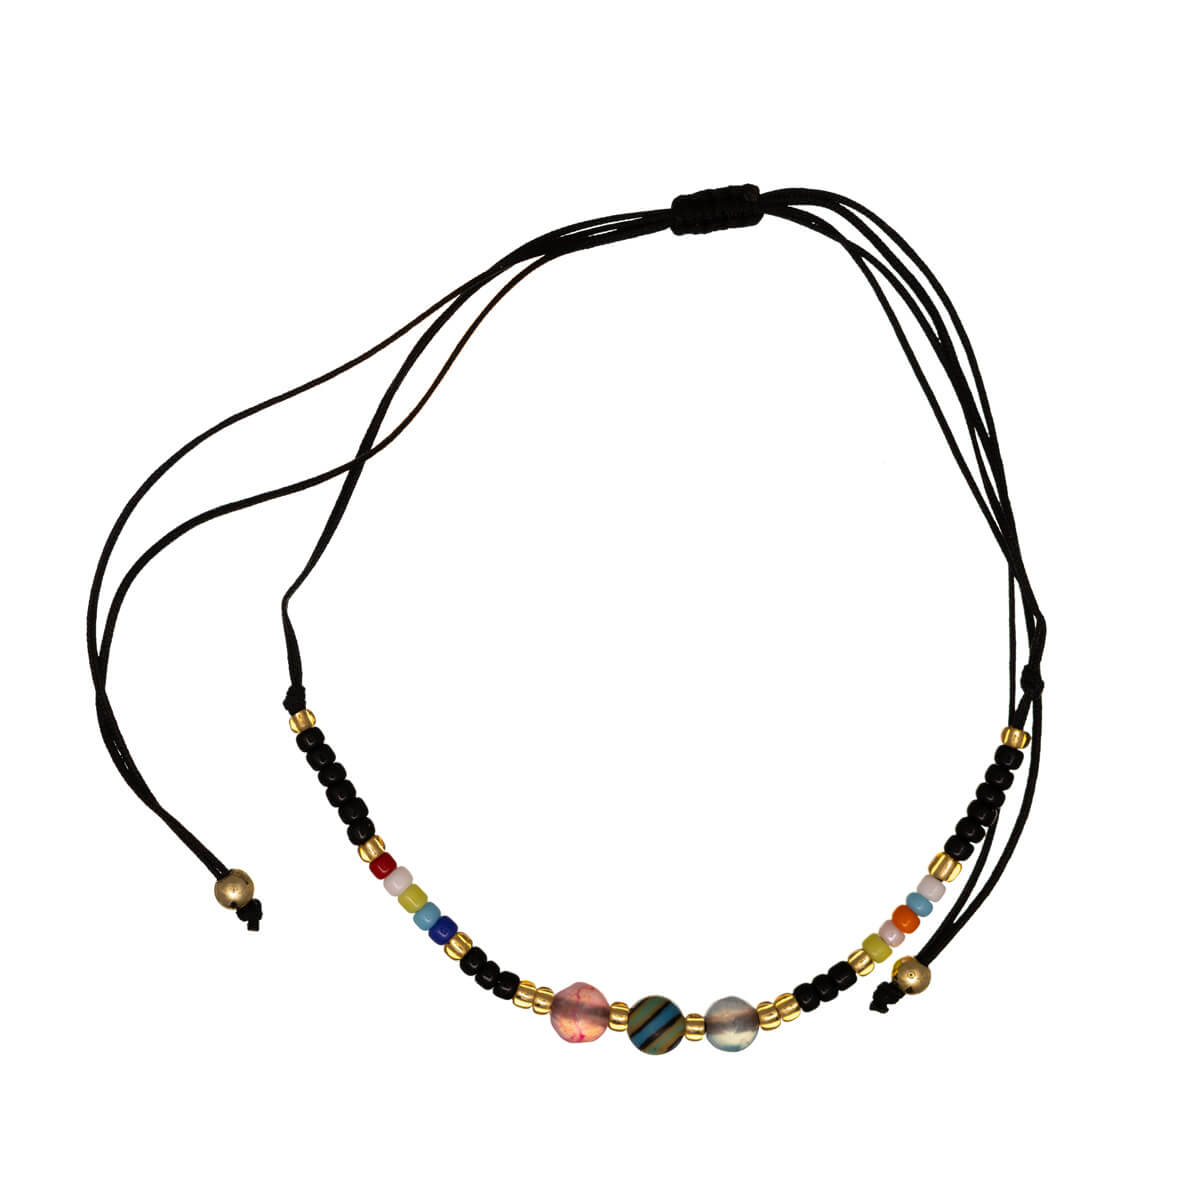 Adjustable bracelet with three glass beads